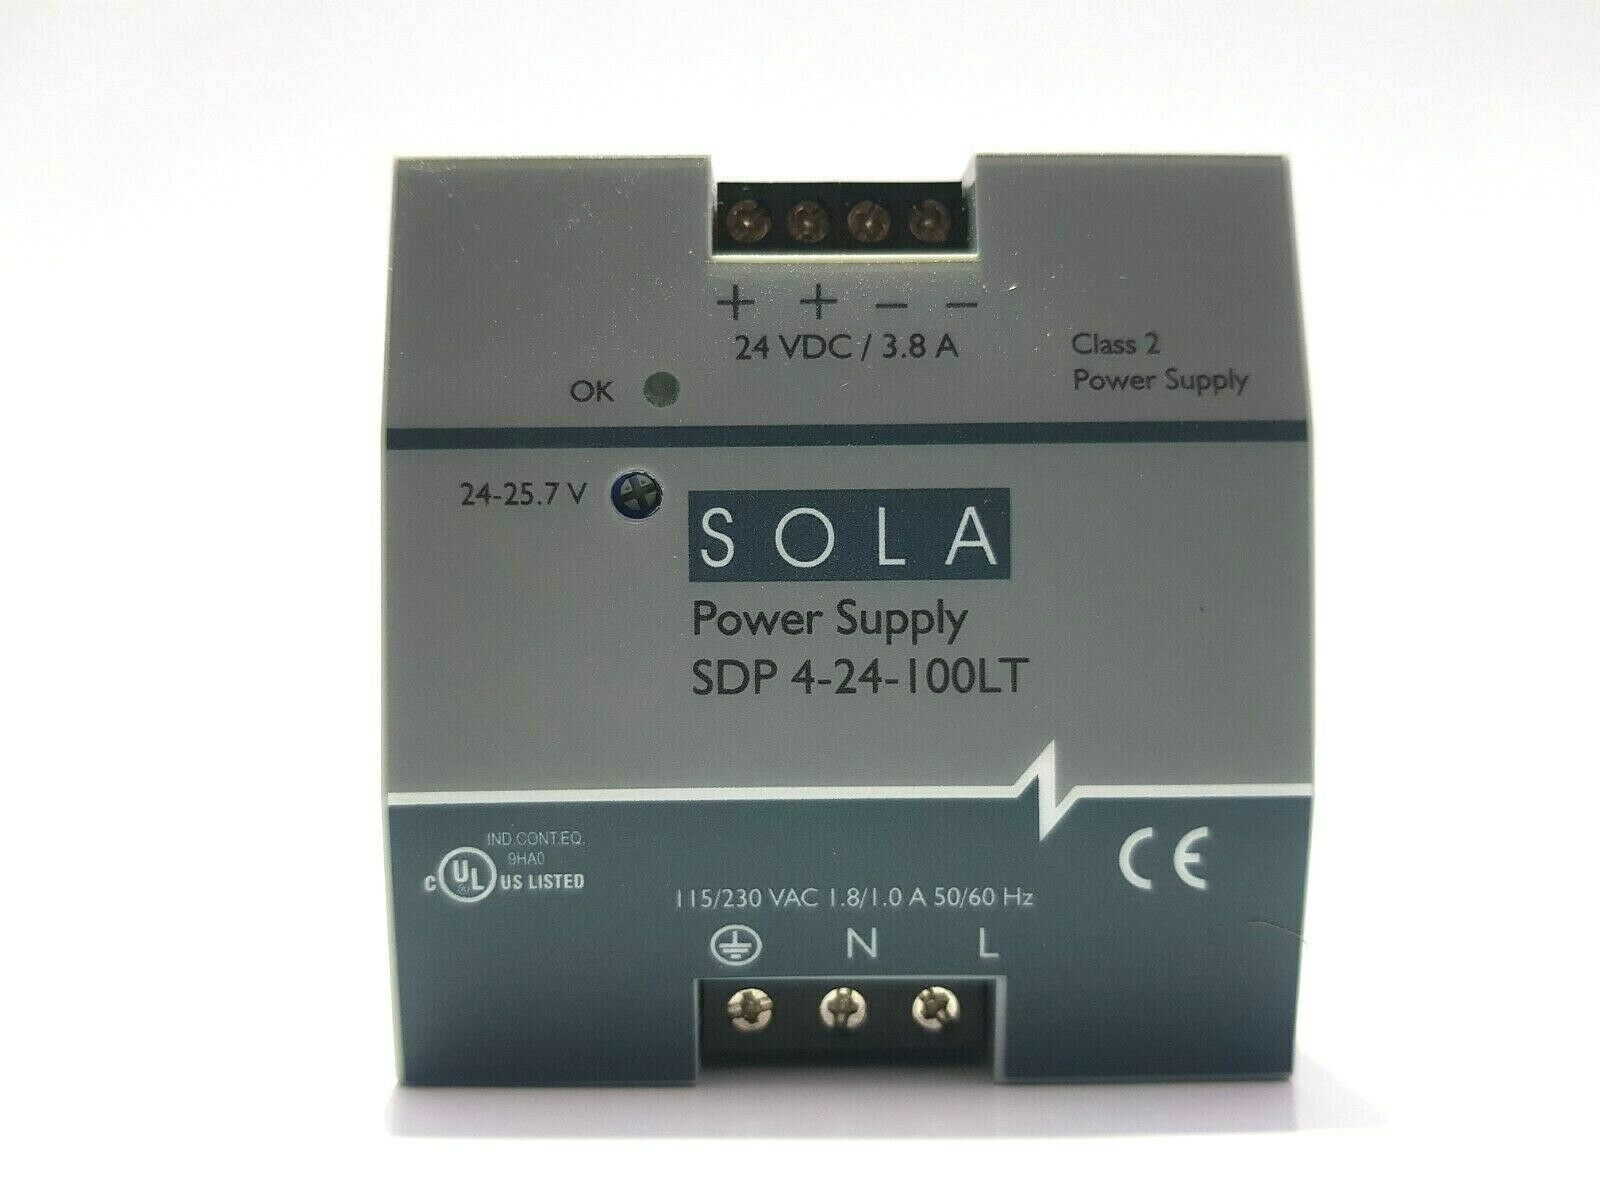 SOLA SDP-4-24-100LT POWER SUPPLY 24VDC 3.8A 115/230 VAC 1.8/1.0A 50/60 Hz